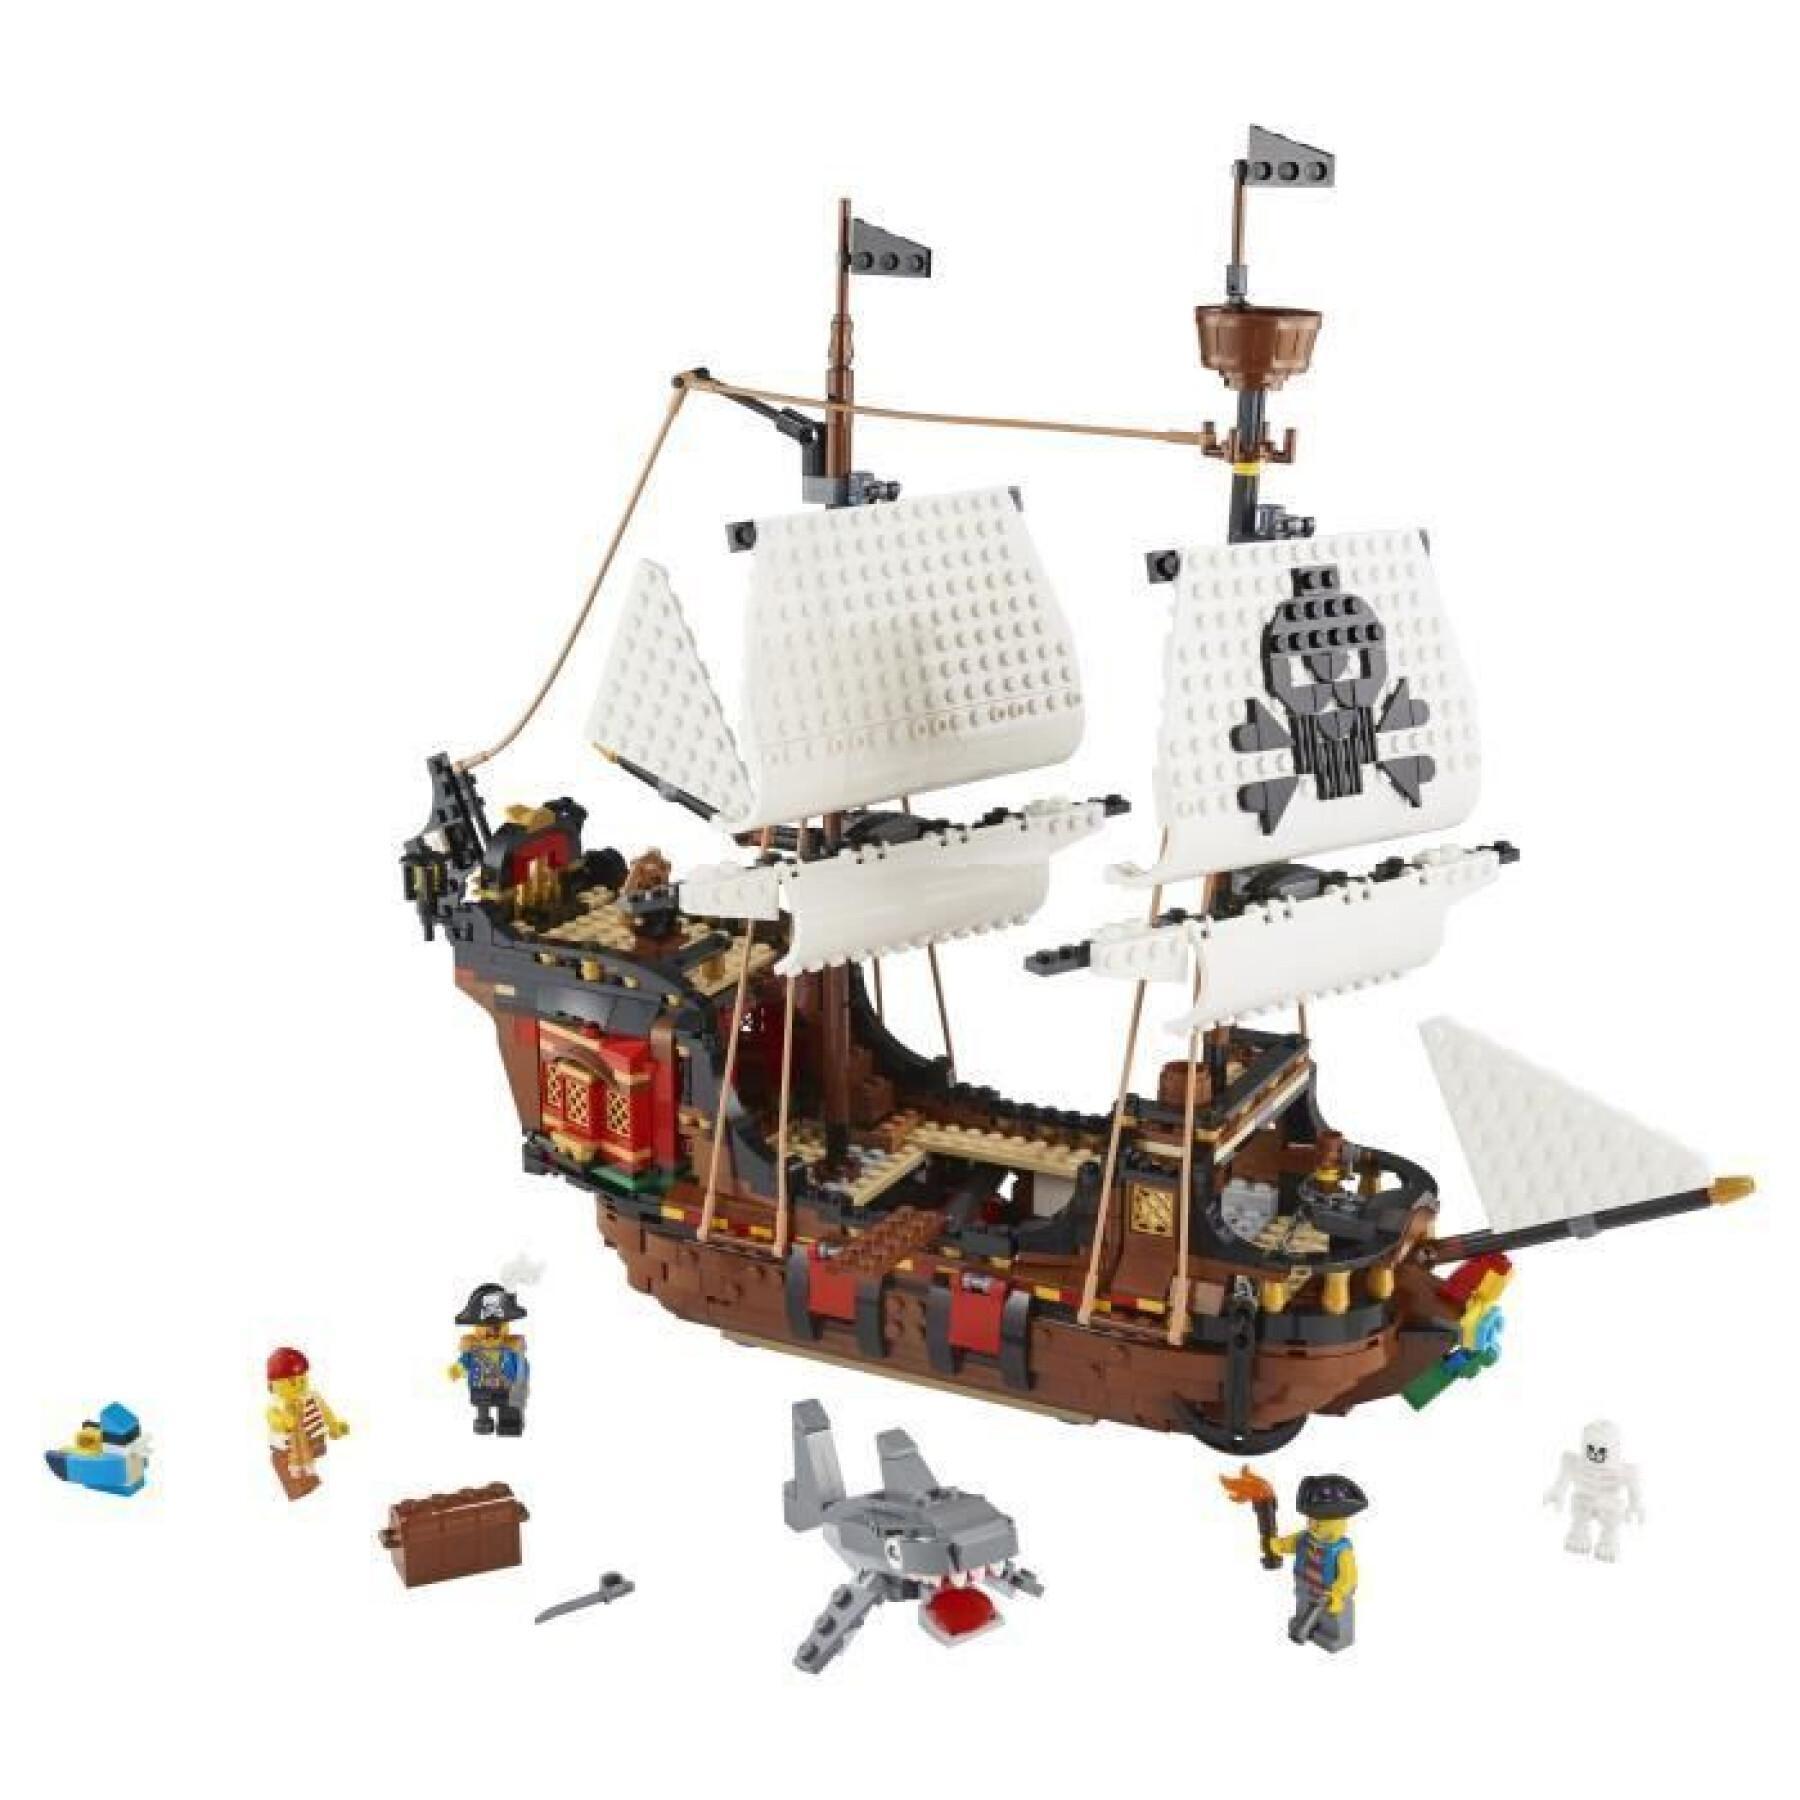 Pirate ship building games creator Lego